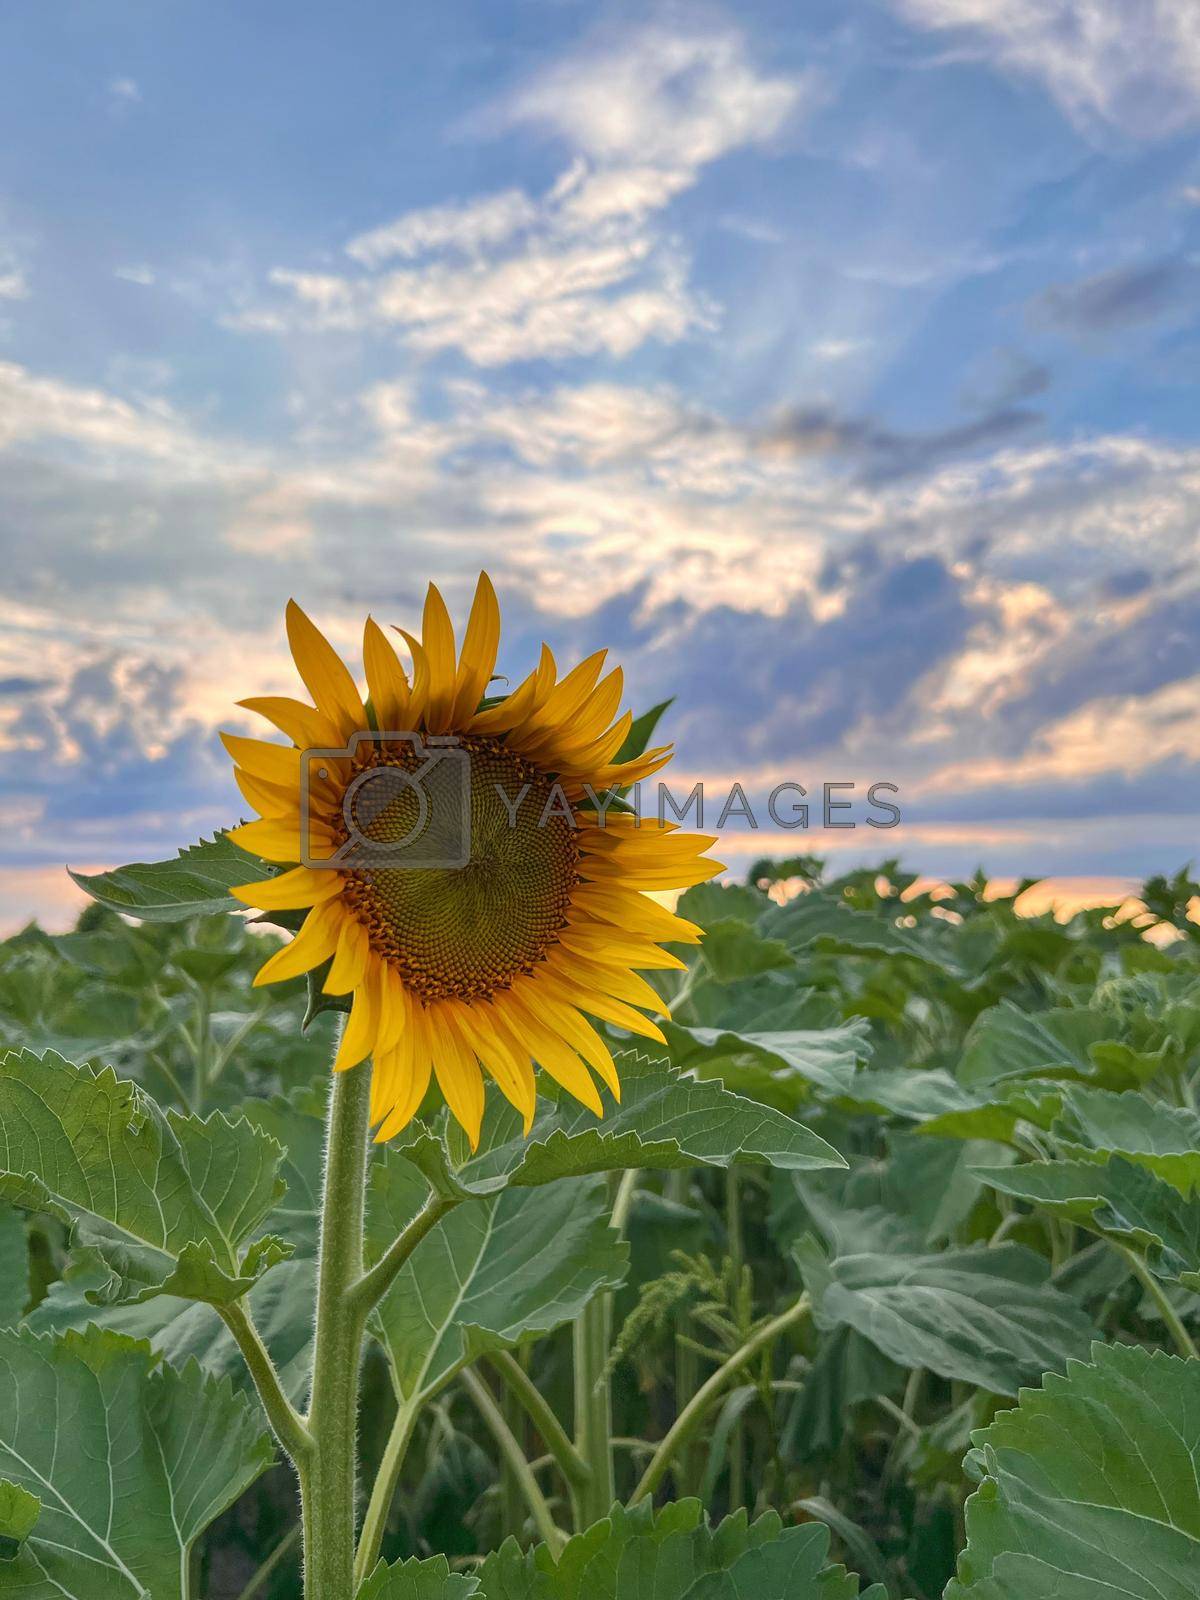 Royalty free image of Sunflower field yellow summer close up by Olena_Mykhailenko